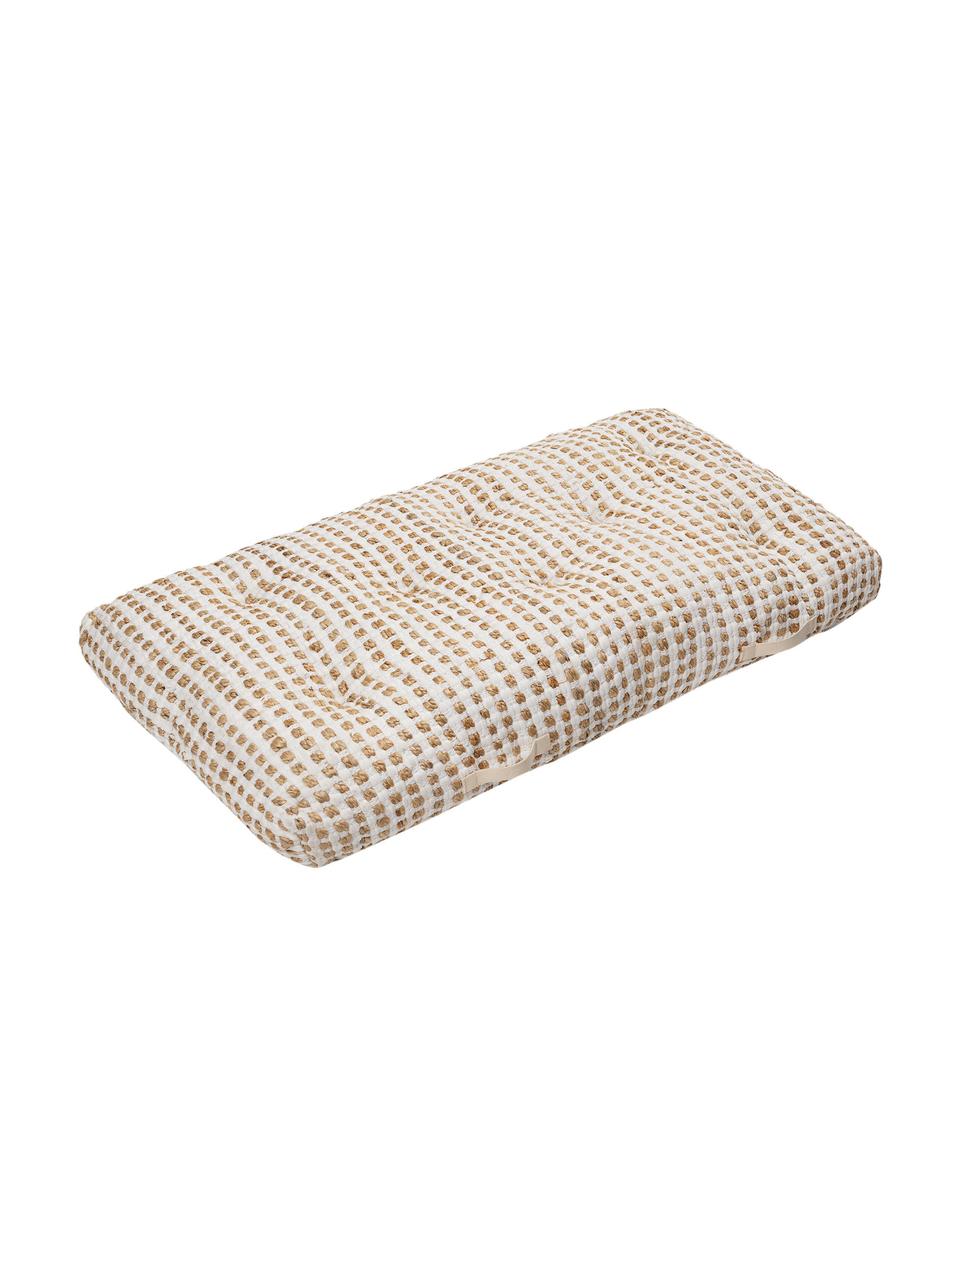 Cuscino da pavimento boho in cotone/juta Fiesta, Rivestimento: 55% cotone chindi, 45% ju, Bianco, beige, Larg. 120 x Alt. 13 cm